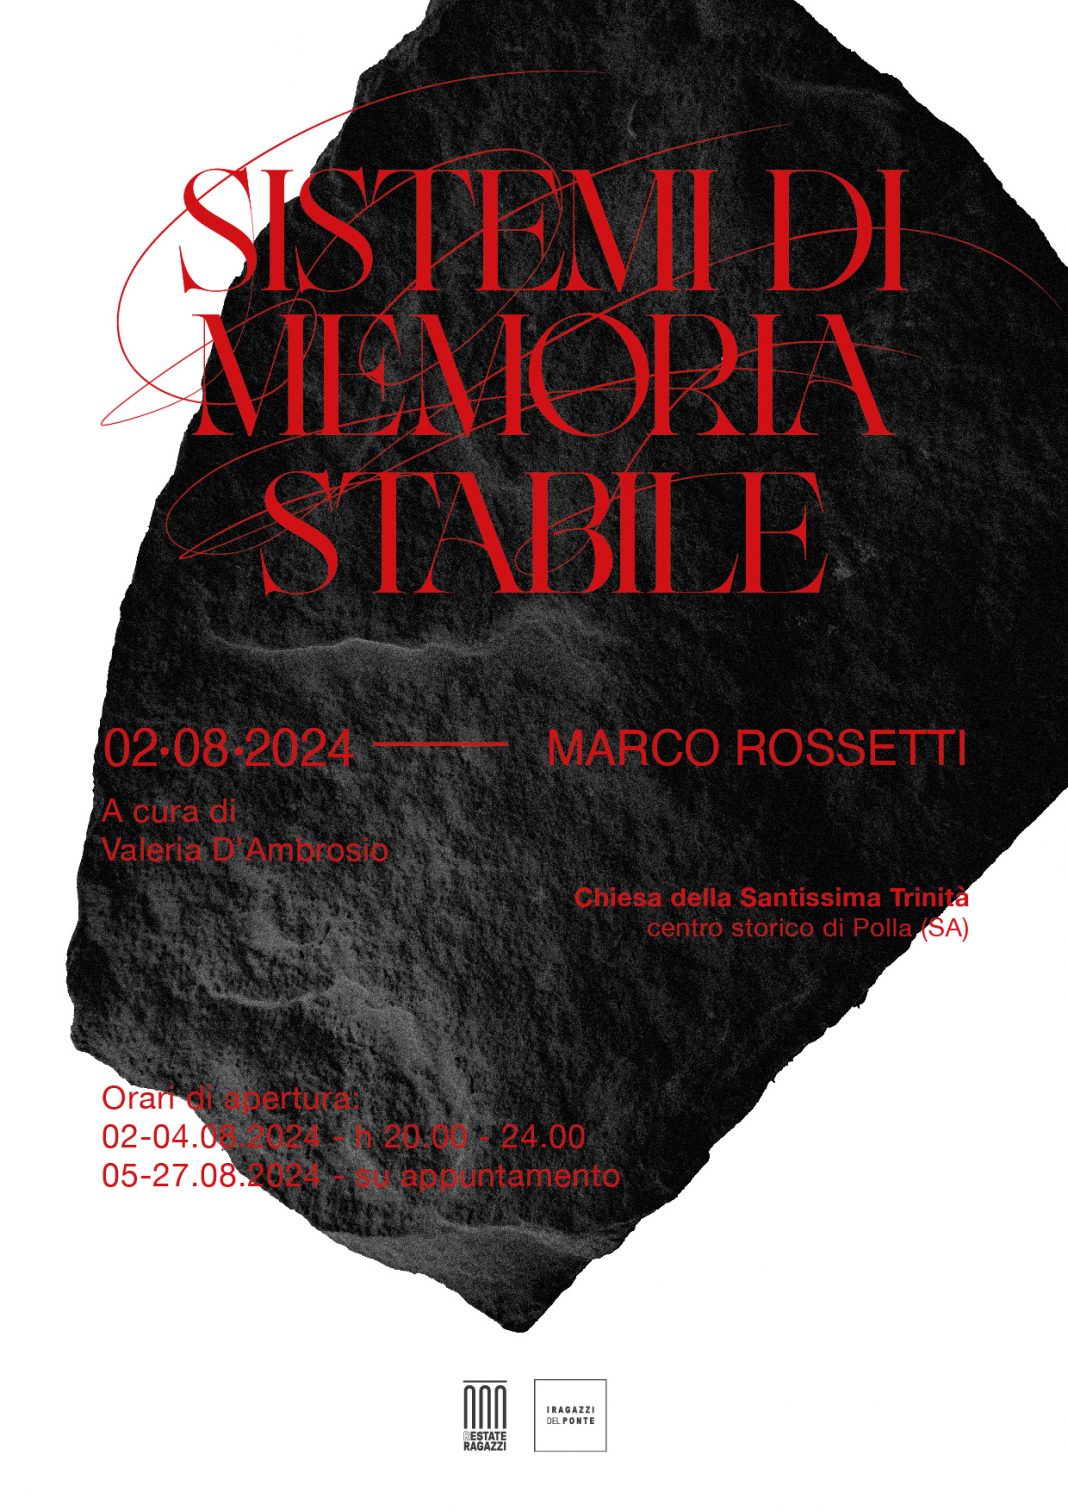 Marco Rossetti – Sistemi di memoria stabilehttps://www.exibart.com/repository/media/formidable/11/img/286/1Rossetti-1068x1511.jpg